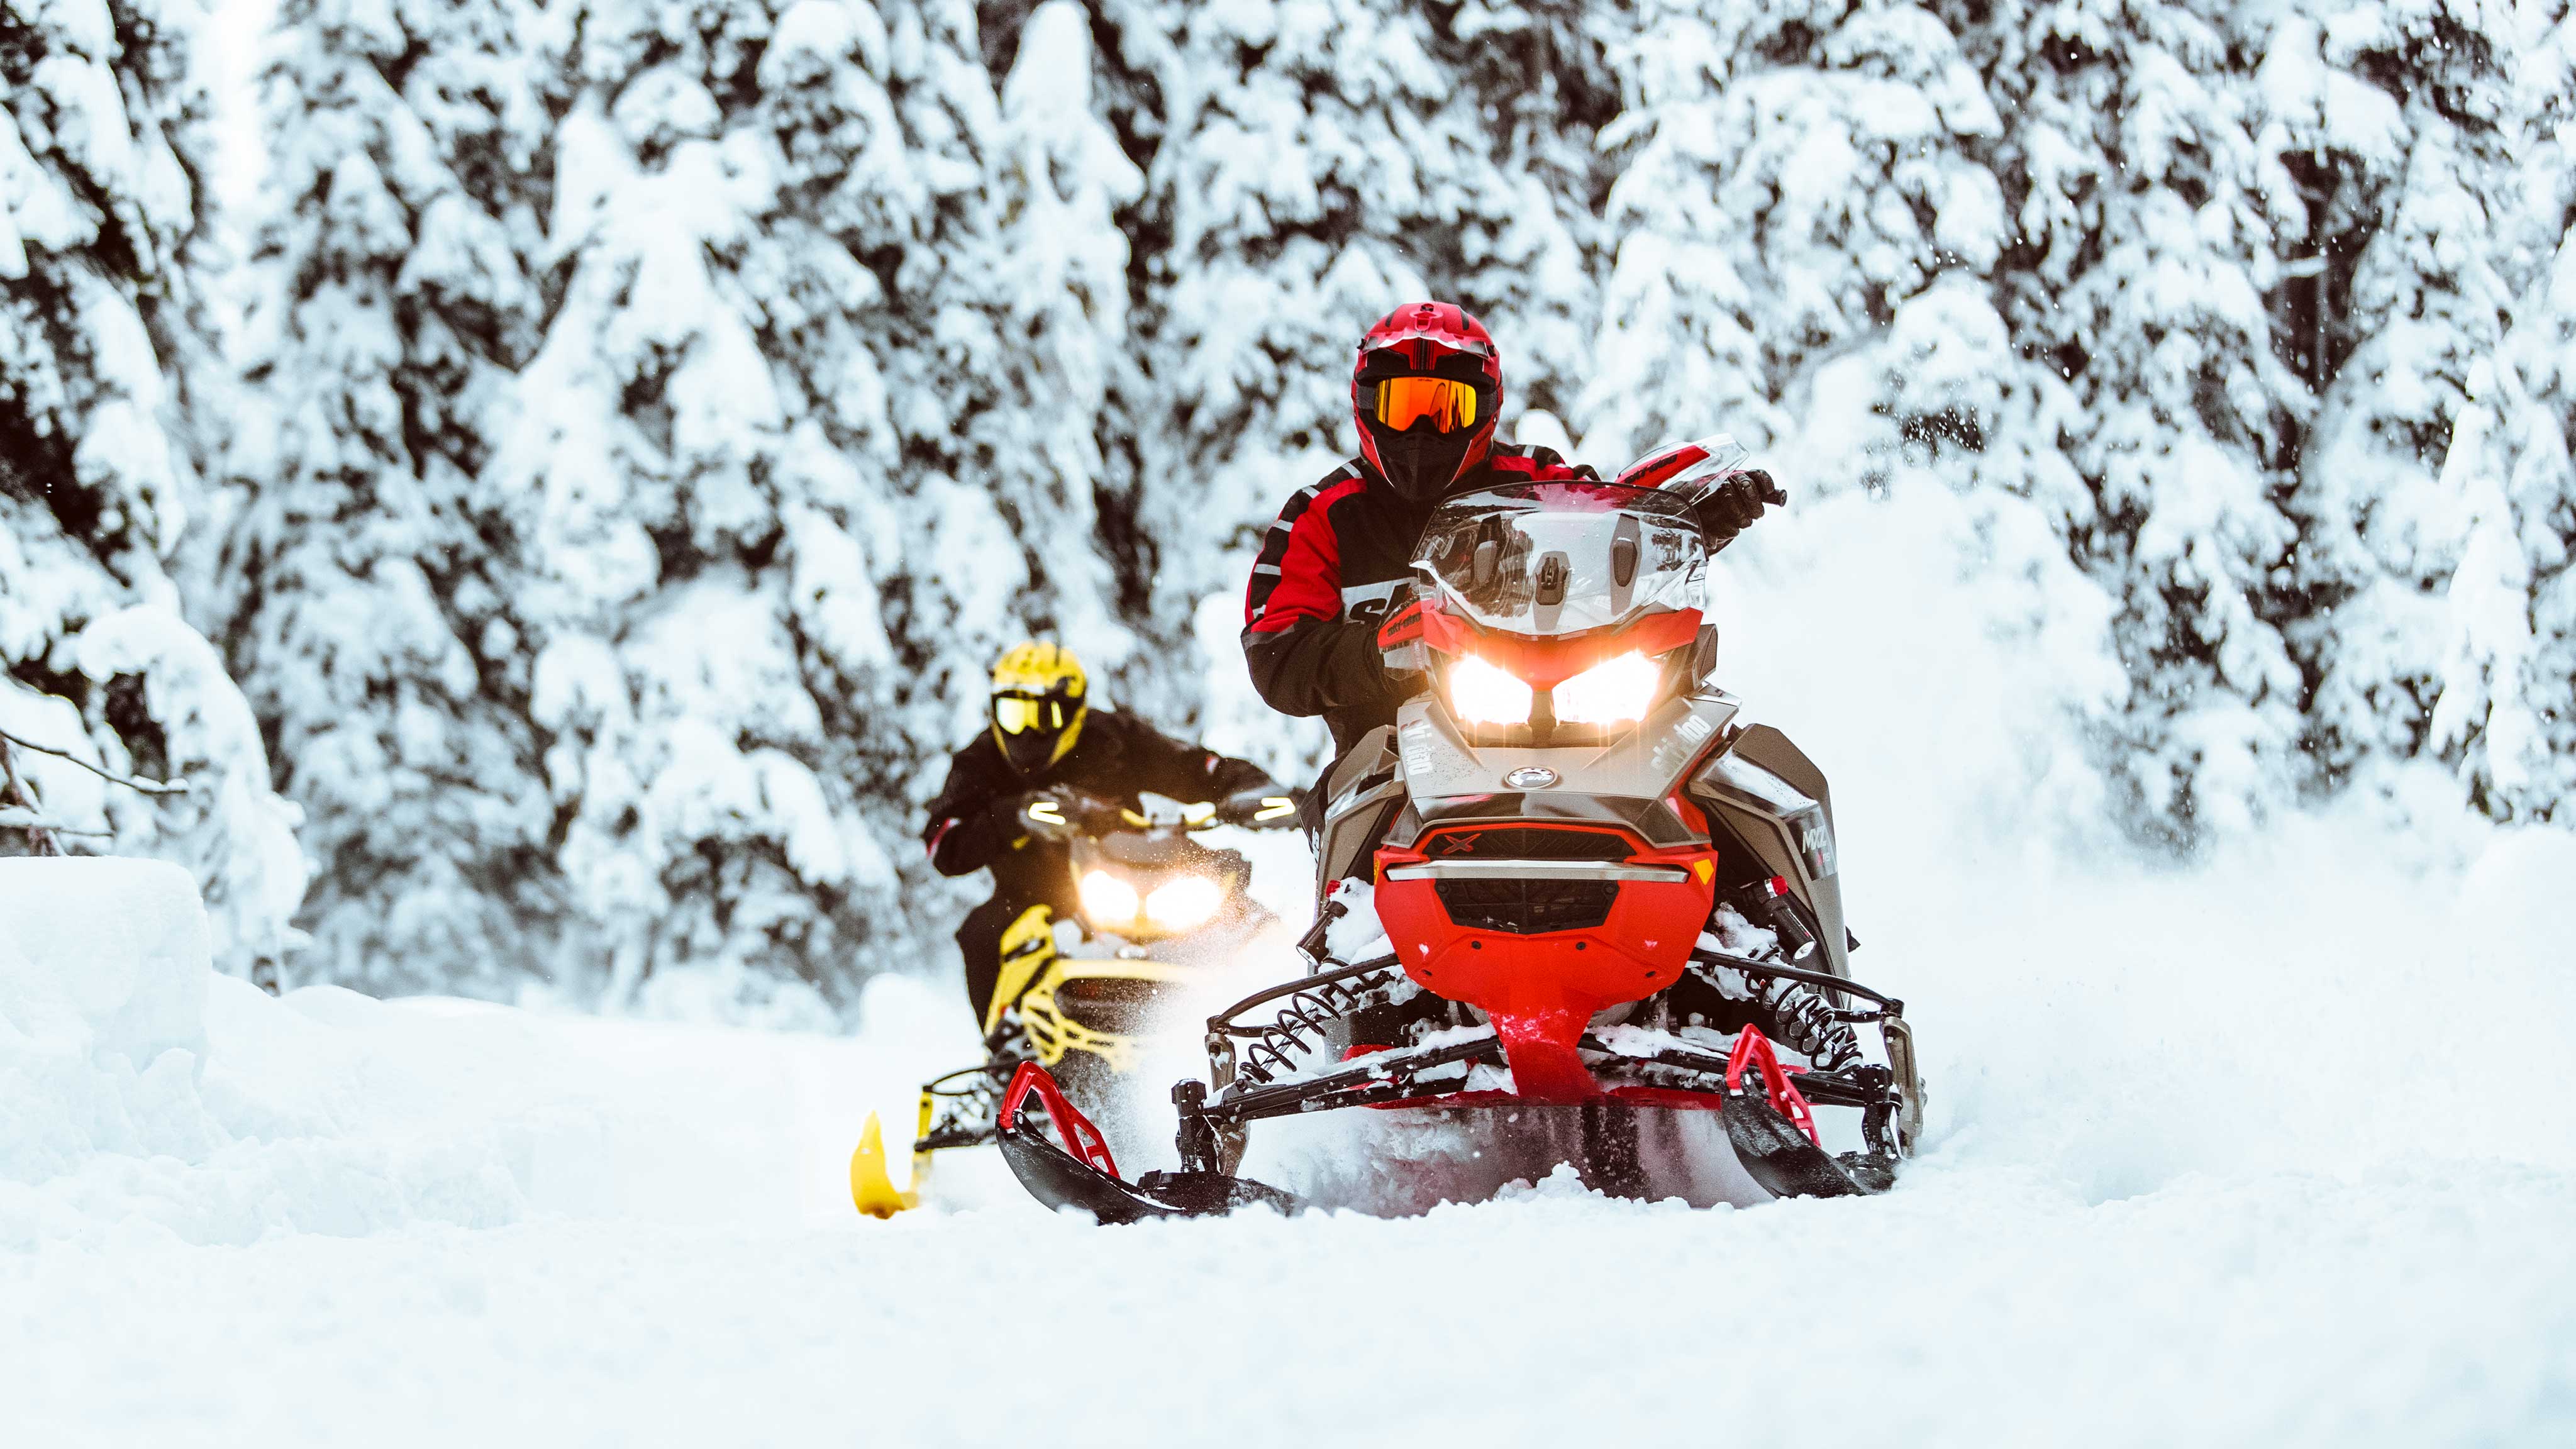 2 riders riding Ski-Doo snowmobile on a trail